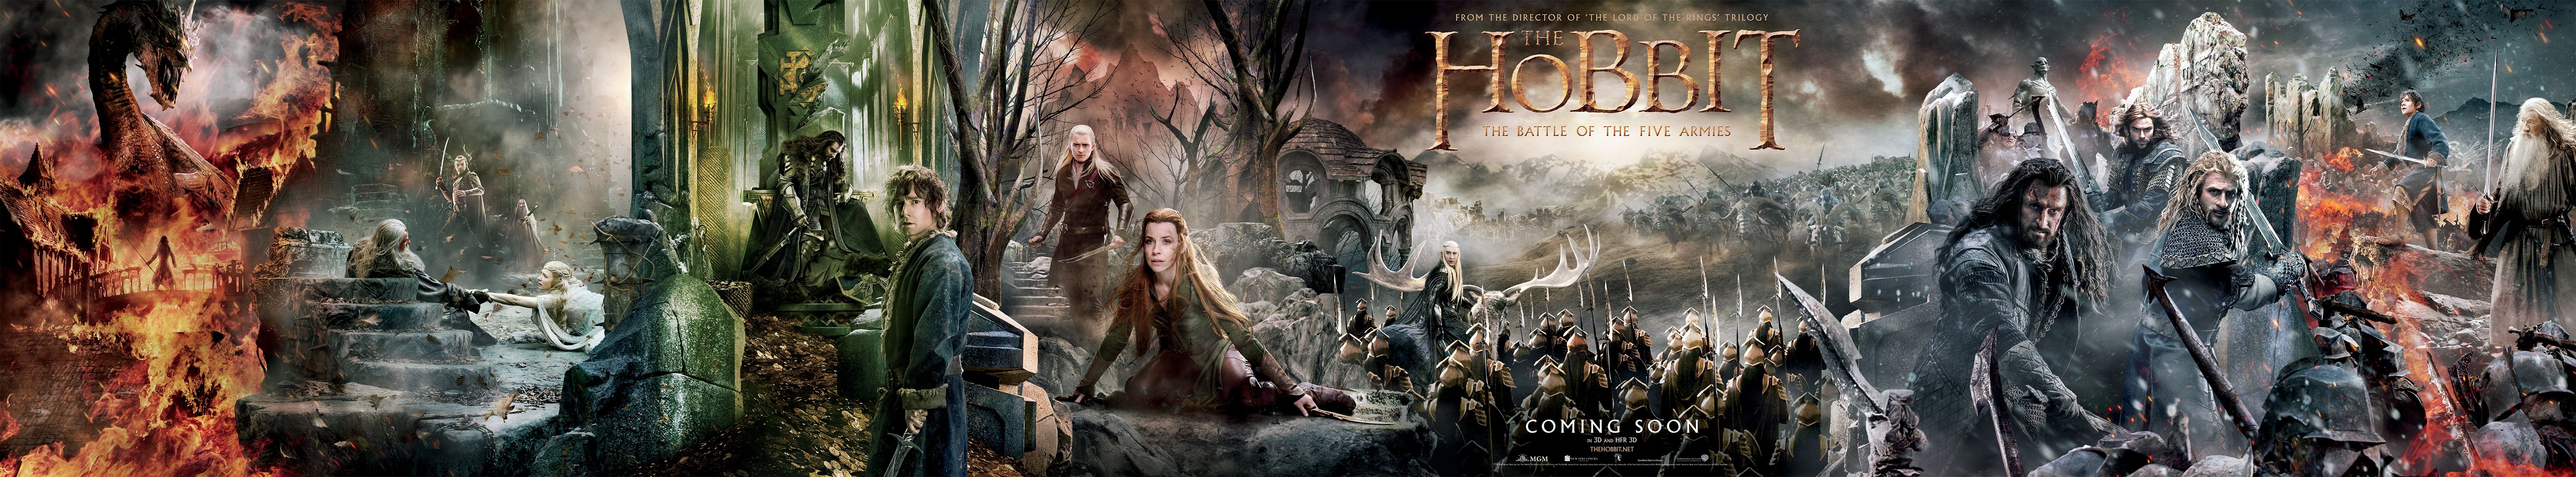 The Hobbit Battle of the Five Armies Banner